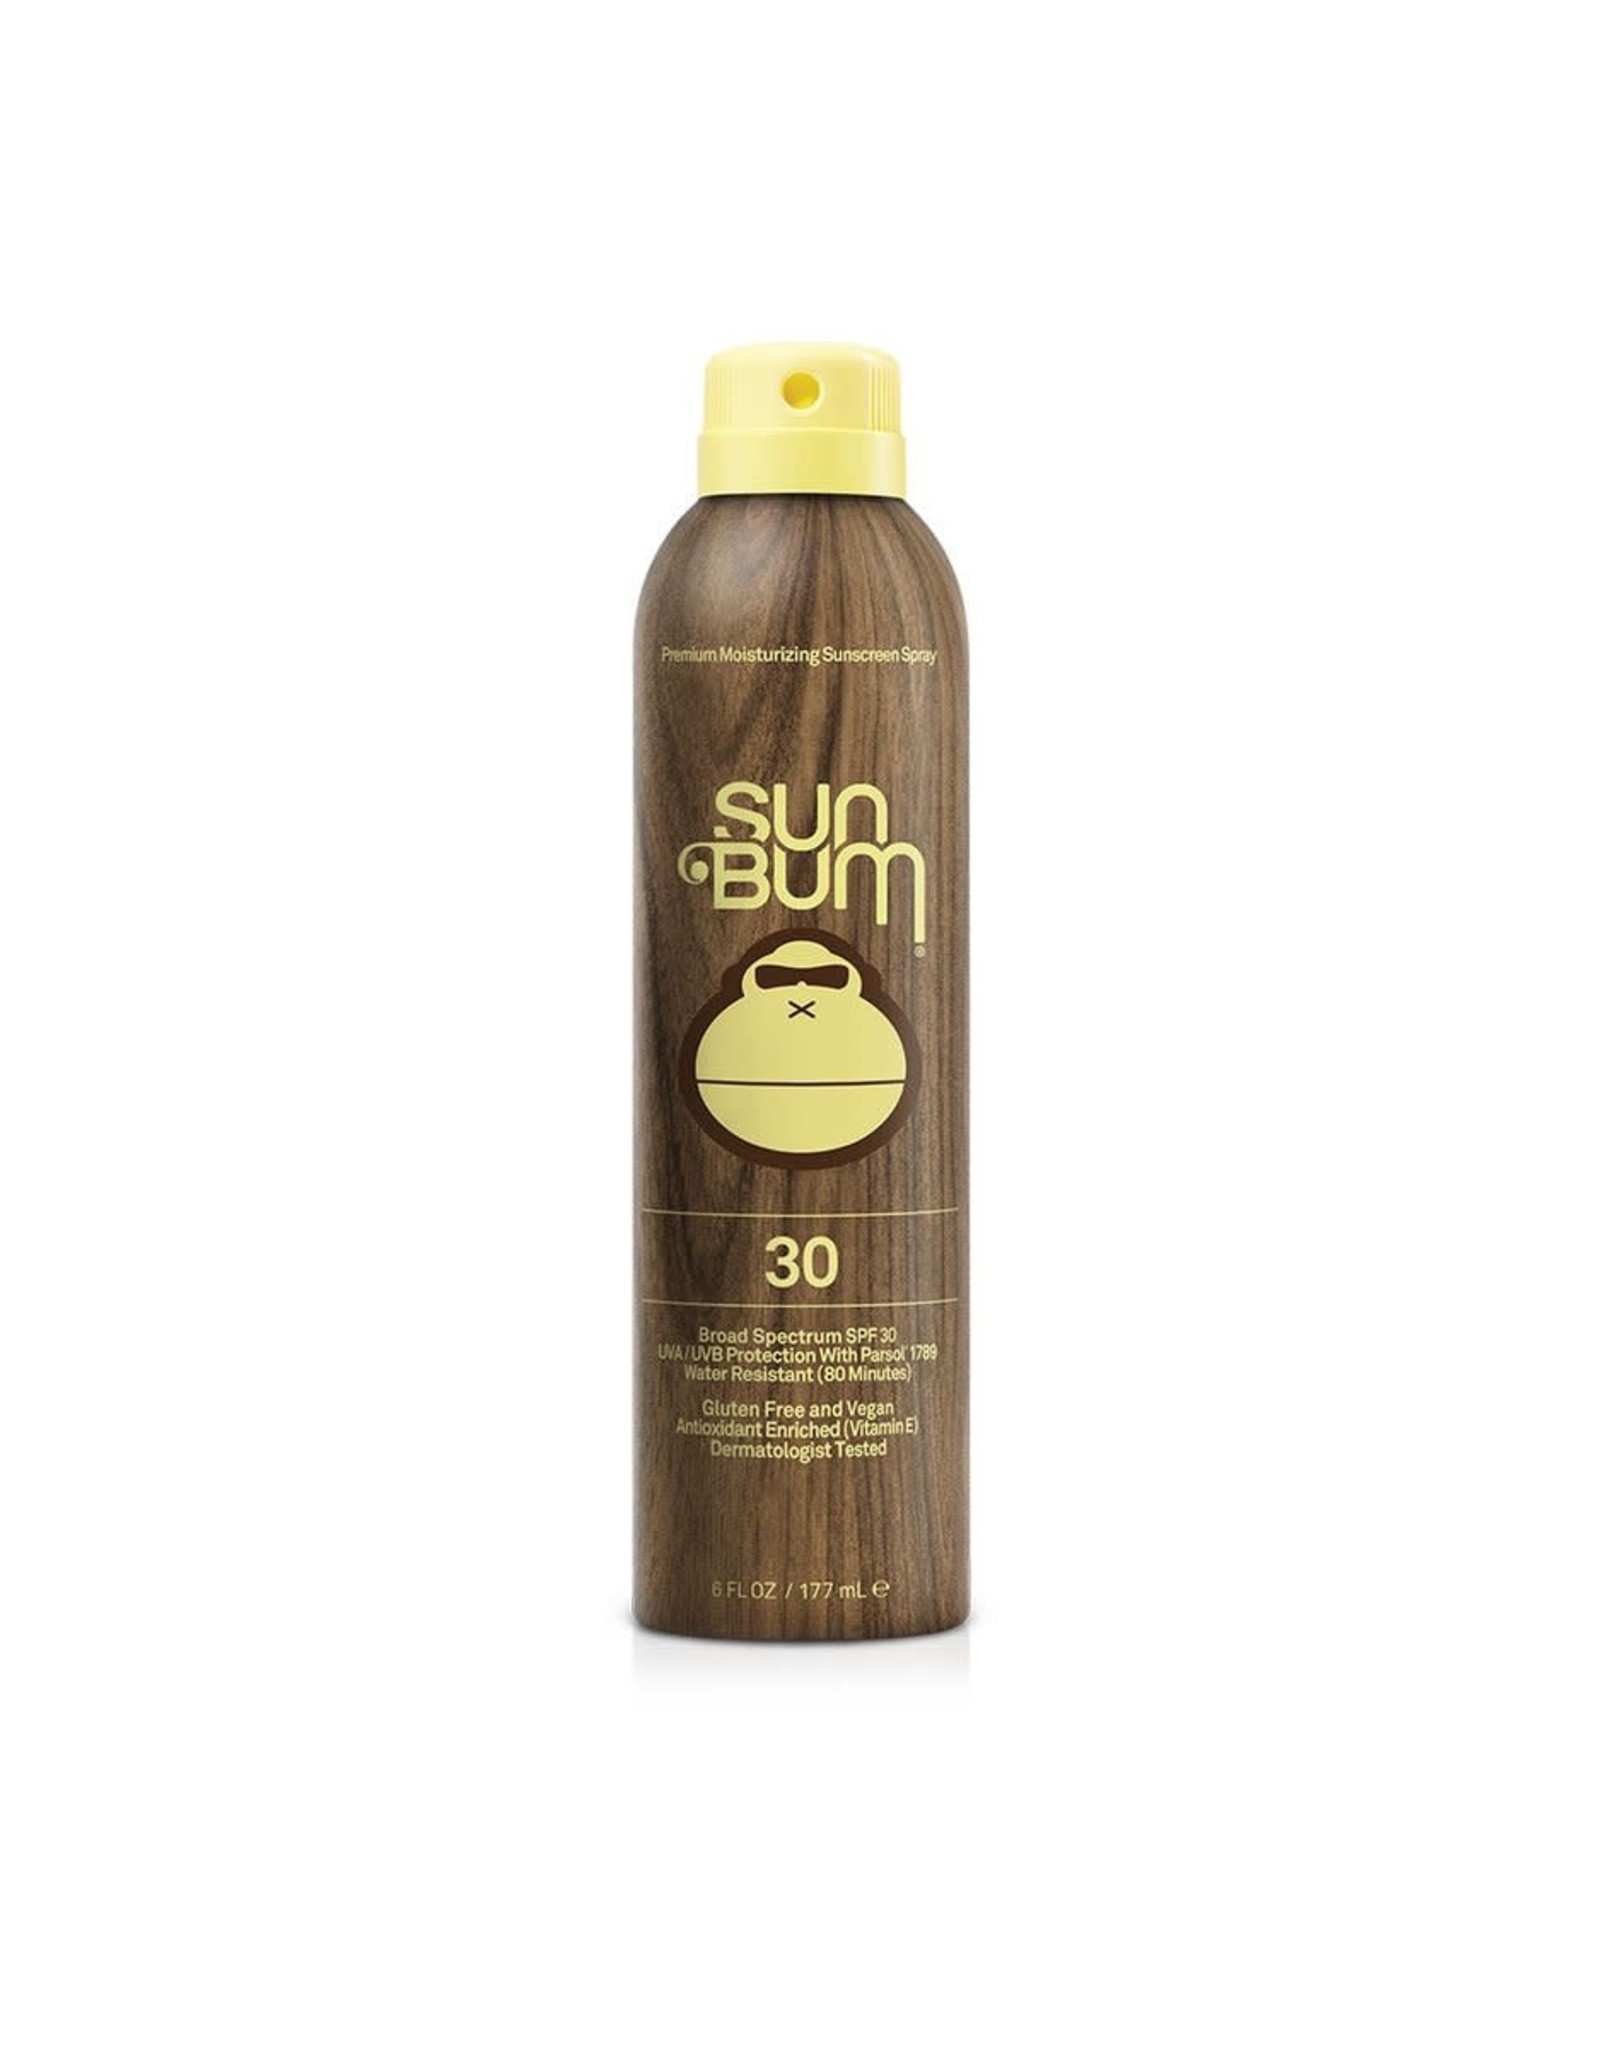 Sun Bum Sun Bum Original SPF 30 Sunscreen Spray 6 oz.